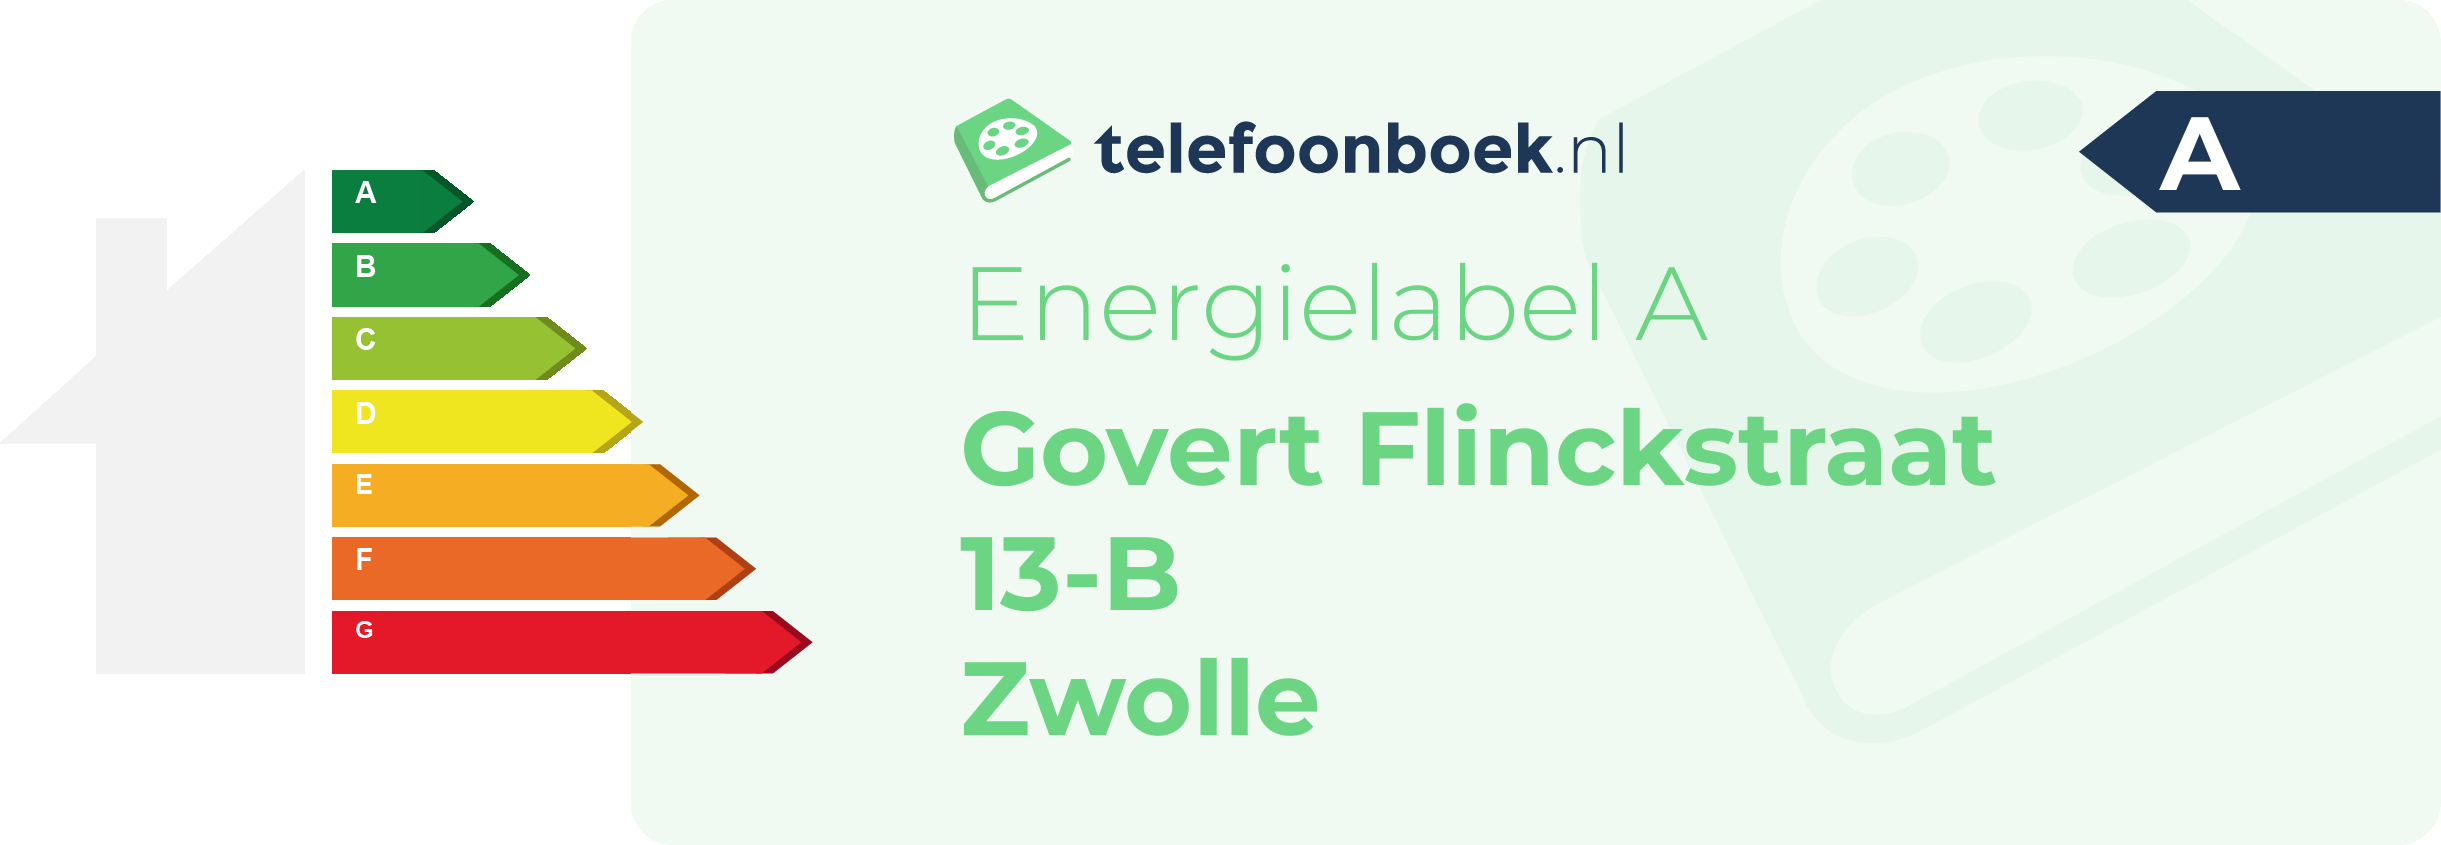 Energielabel Govert Flinckstraat 13-B Zwolle